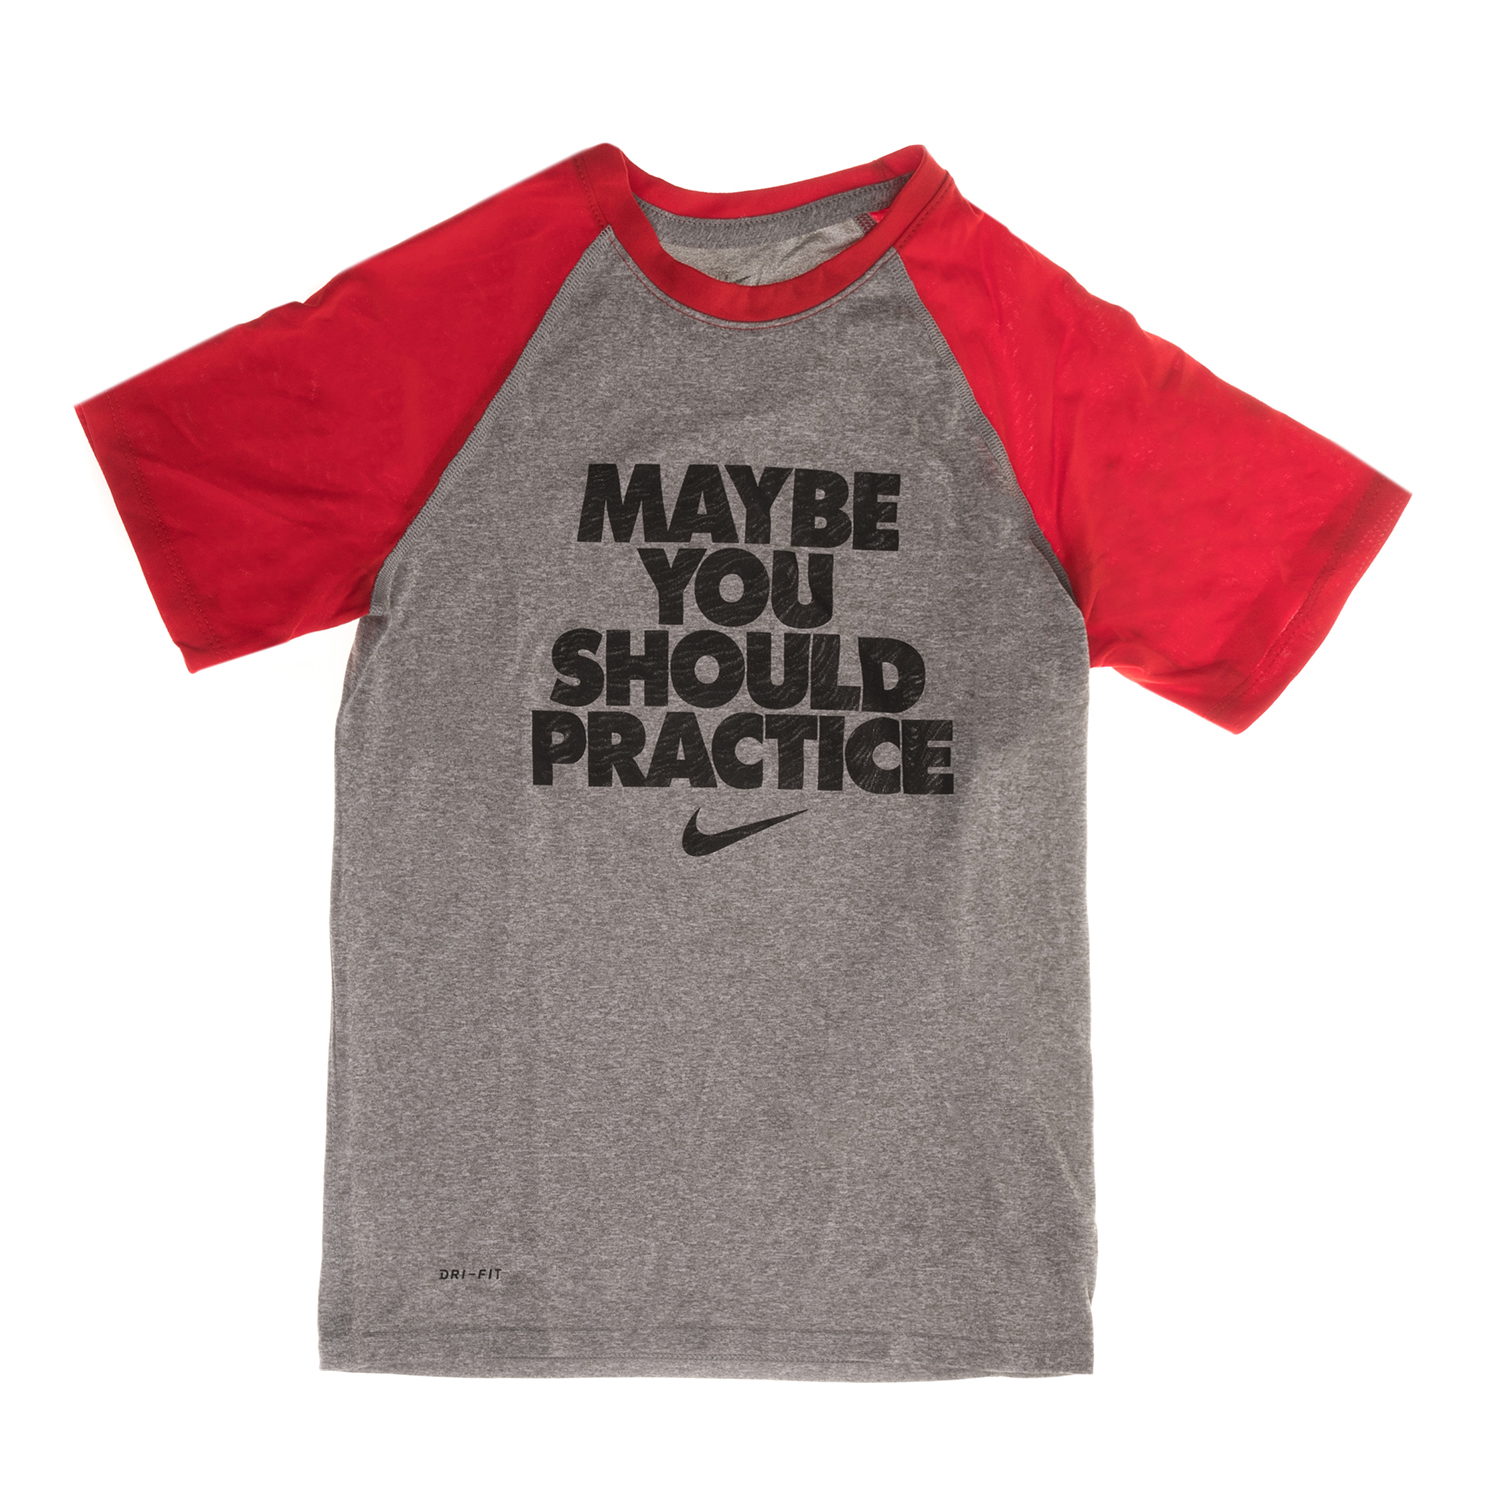 NIKE - Παιδική κοντομάνικη μπλούζα NIKEDRY LGD SHLD PRACTICE γκρι Παιδικά/Boys/Ρούχα/Αθλητικά